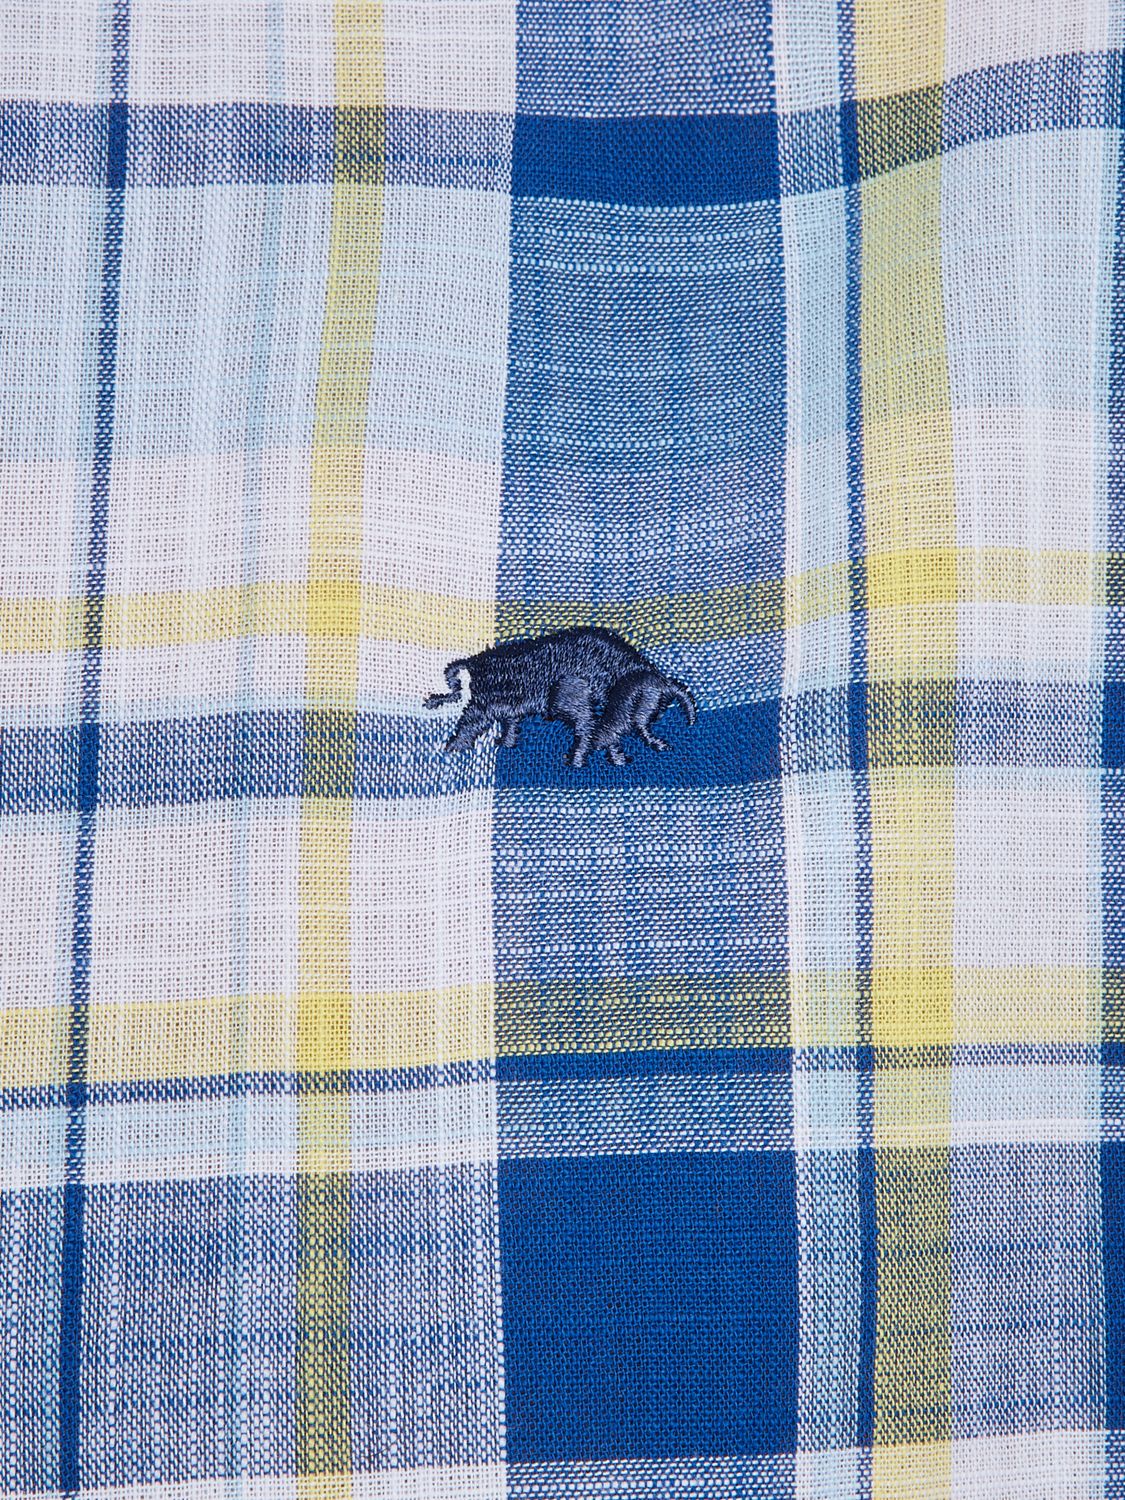 Raging Bull Short Sleeve Madras Check Linen Look Shirt, Sky Blue/Multi, XXXXXL